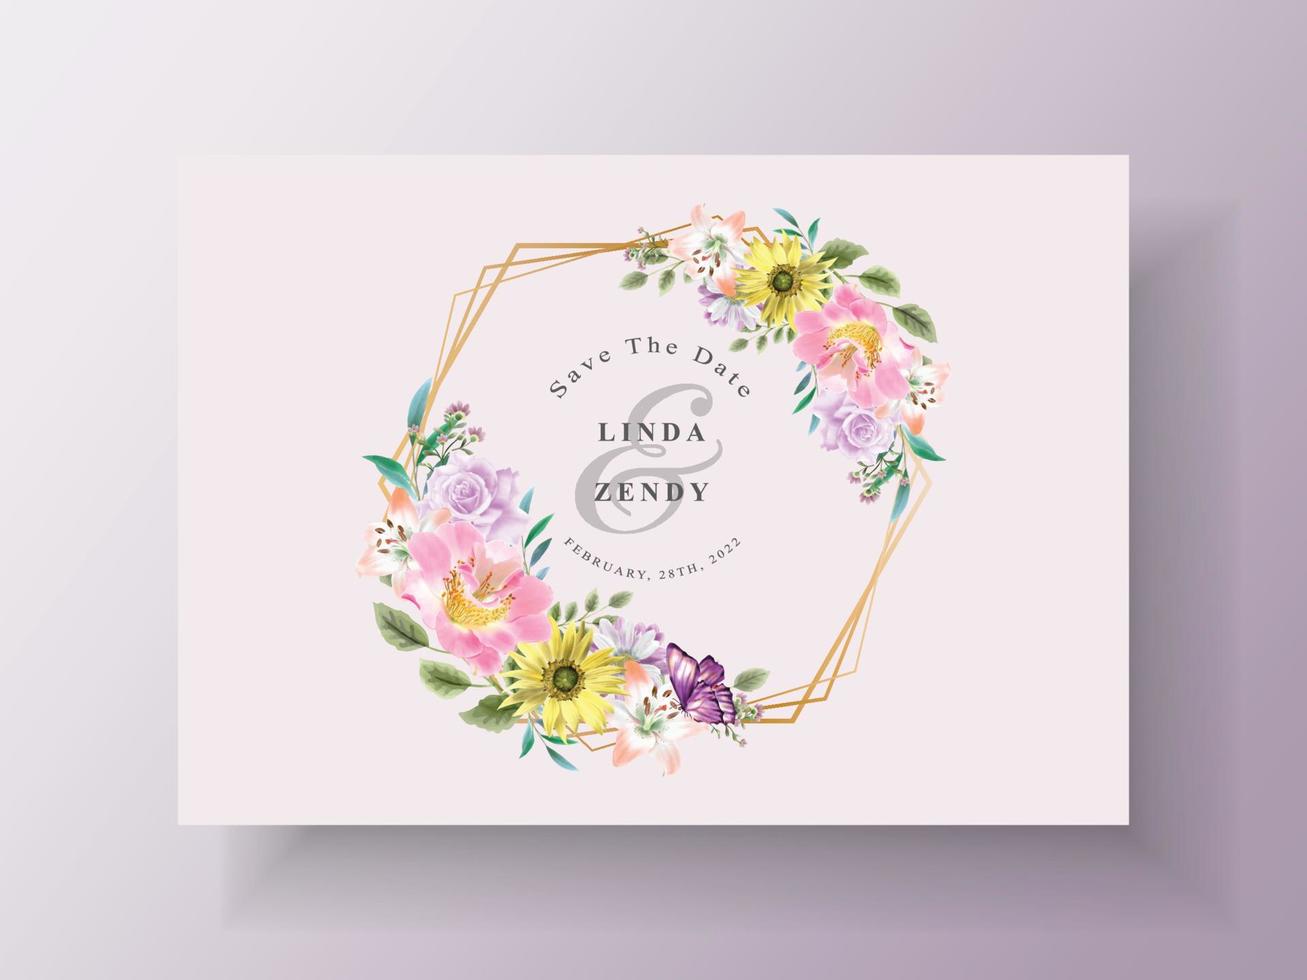 Elegant and beautiful floral wedding invitation card vector